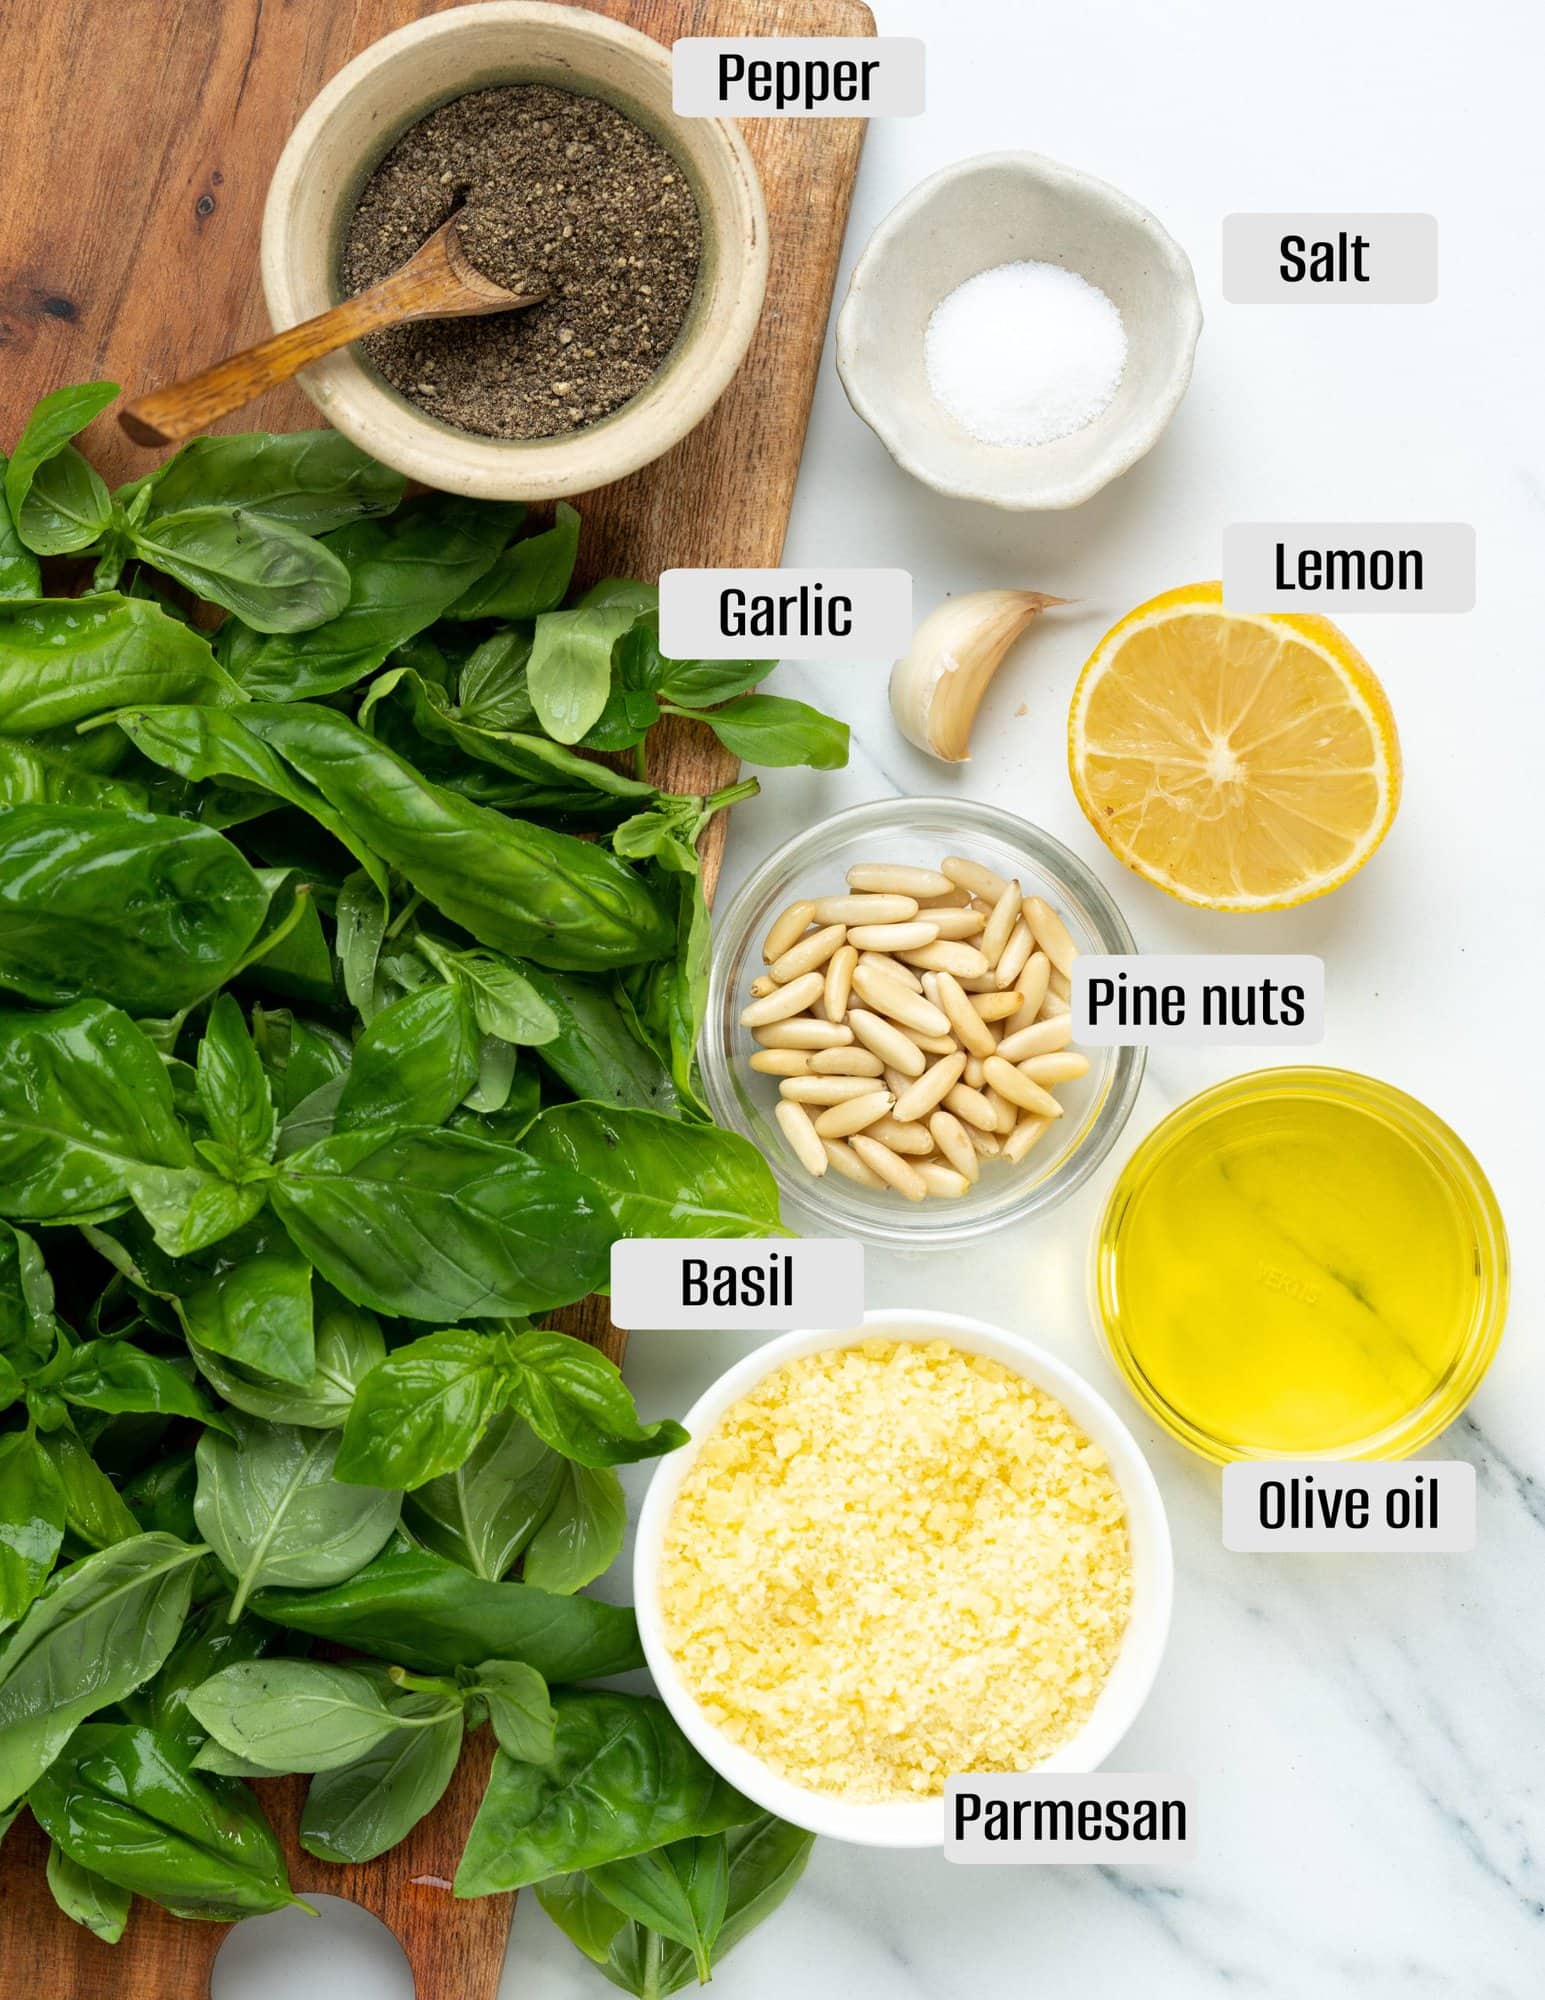 Ingredients for classic pesto sauce - basil, garlic, parmesan, olive oil, pine nuts, lemon juice, salt and pepper.